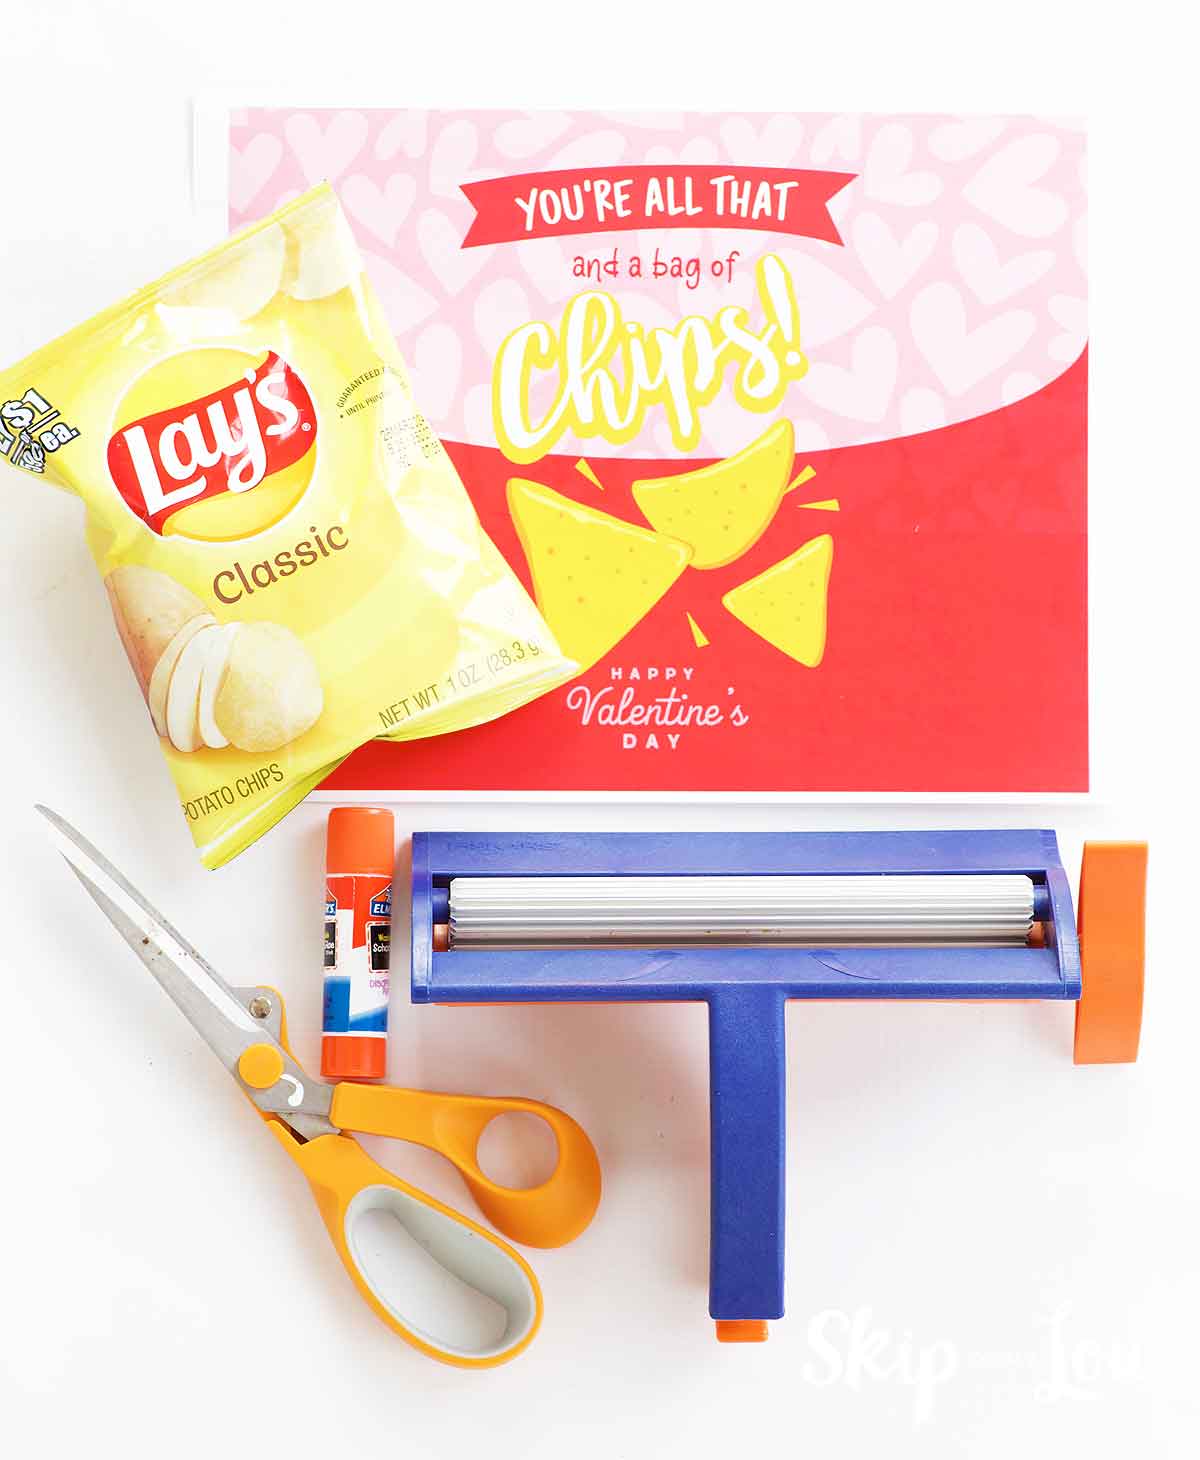 free chip bag template, paper crimper, scissors, glue stick, small bag of chips